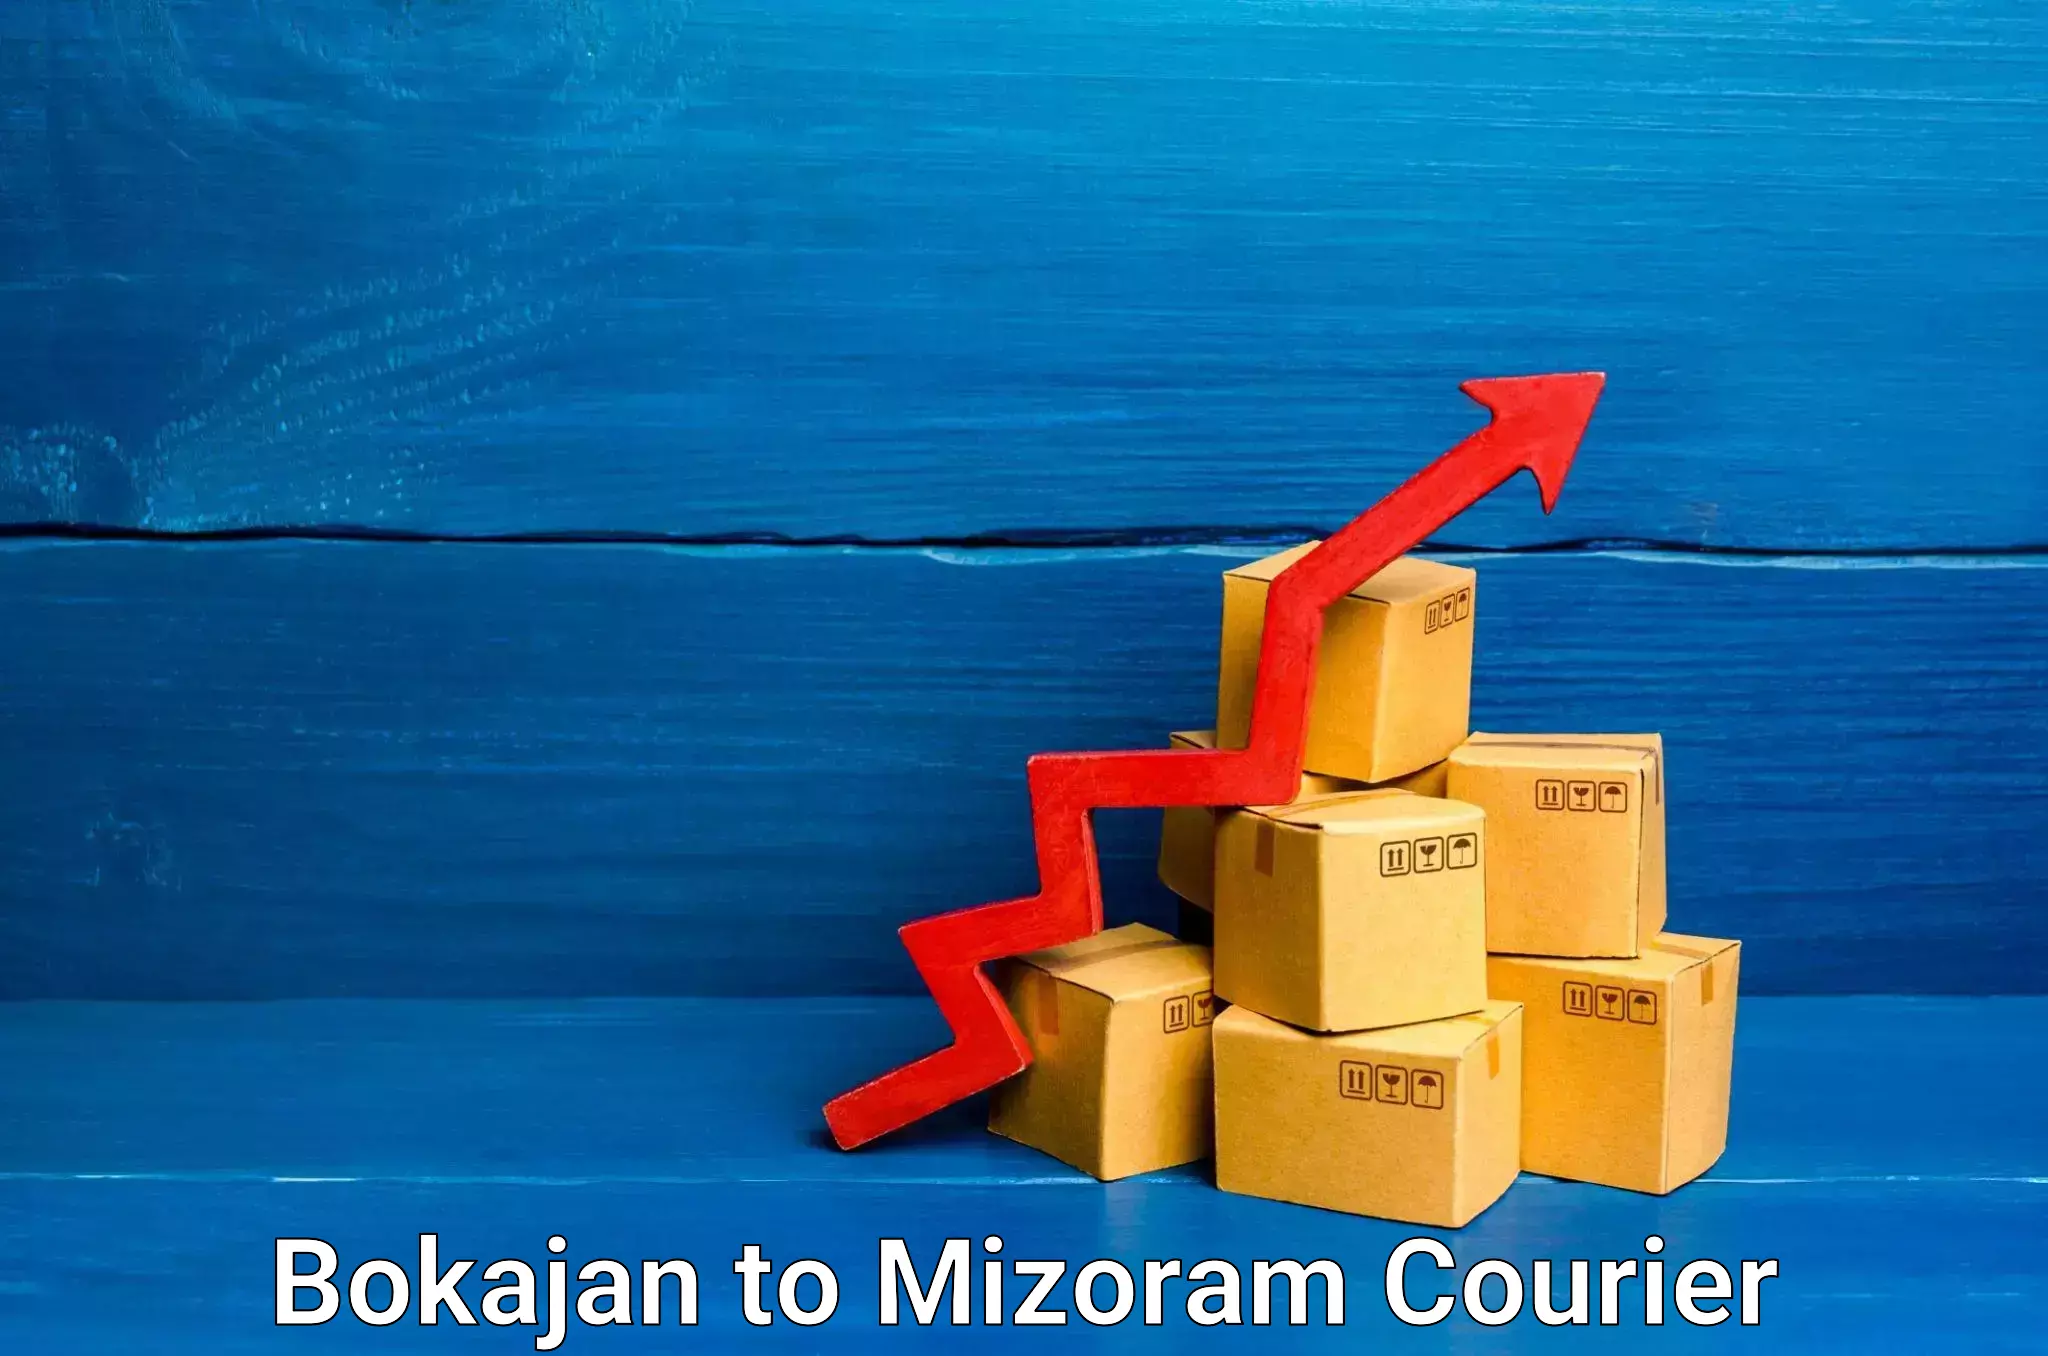 Courier service comparison Bokajan to Mizoram